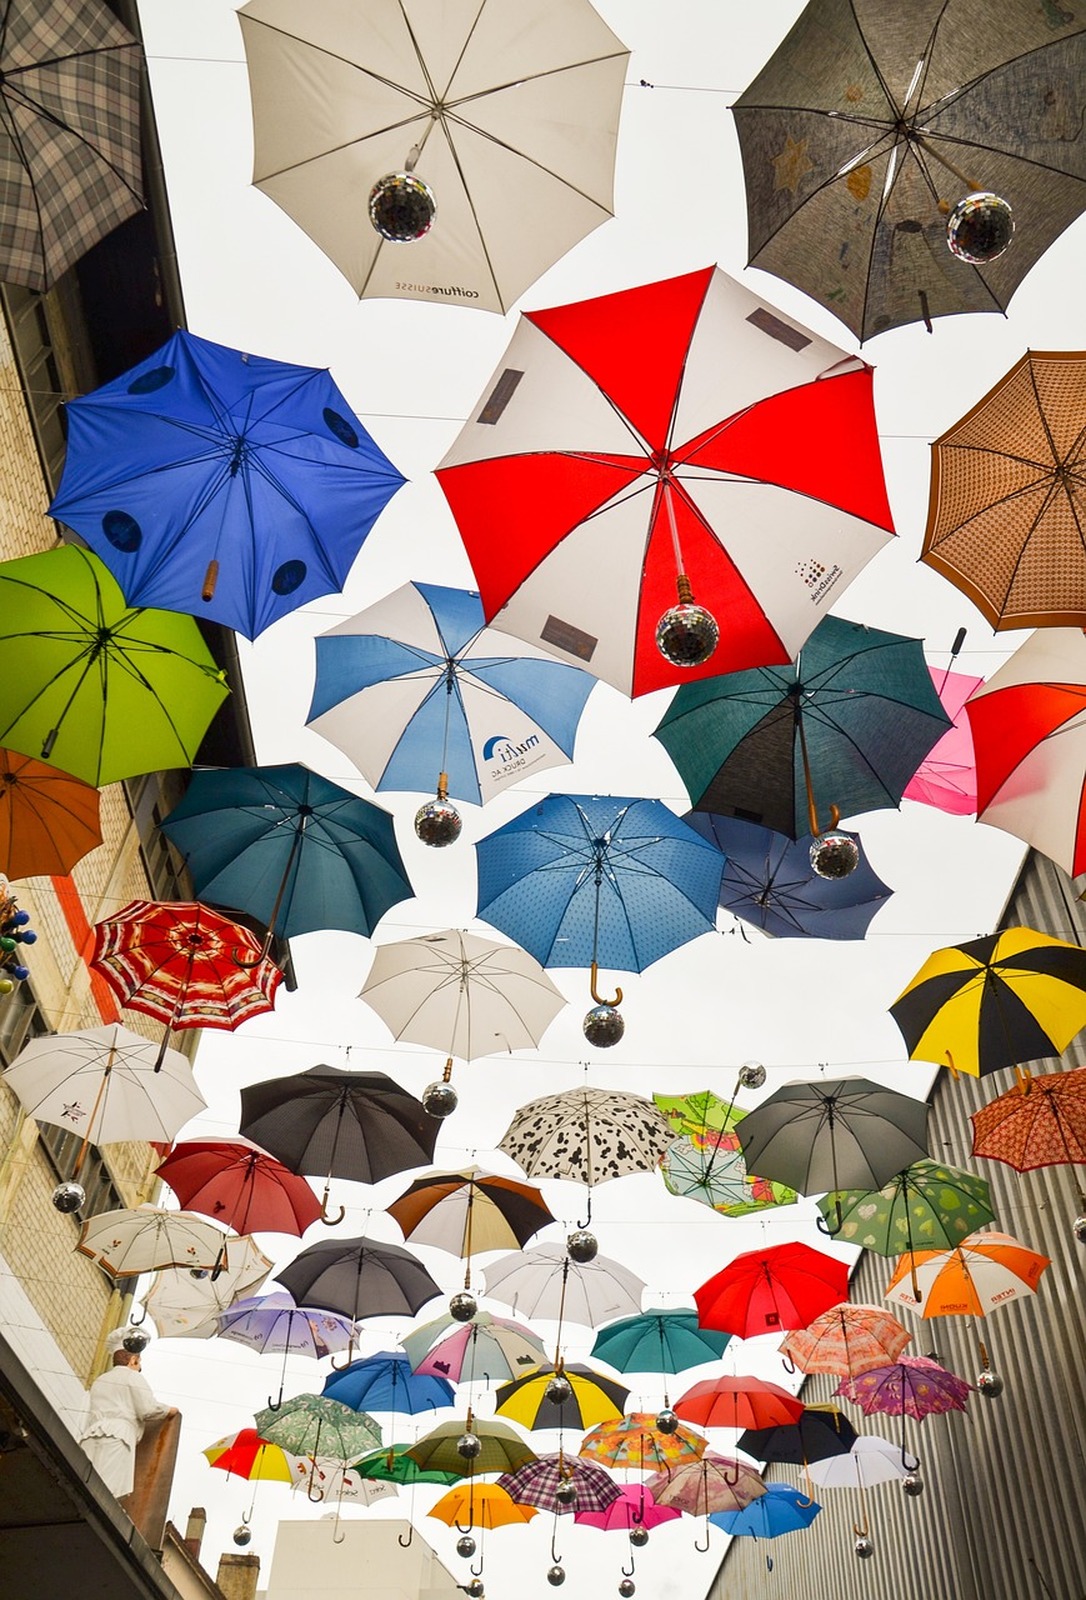 Image of Zurich Alley of Hanging Umbrellas by Team PhotoHound